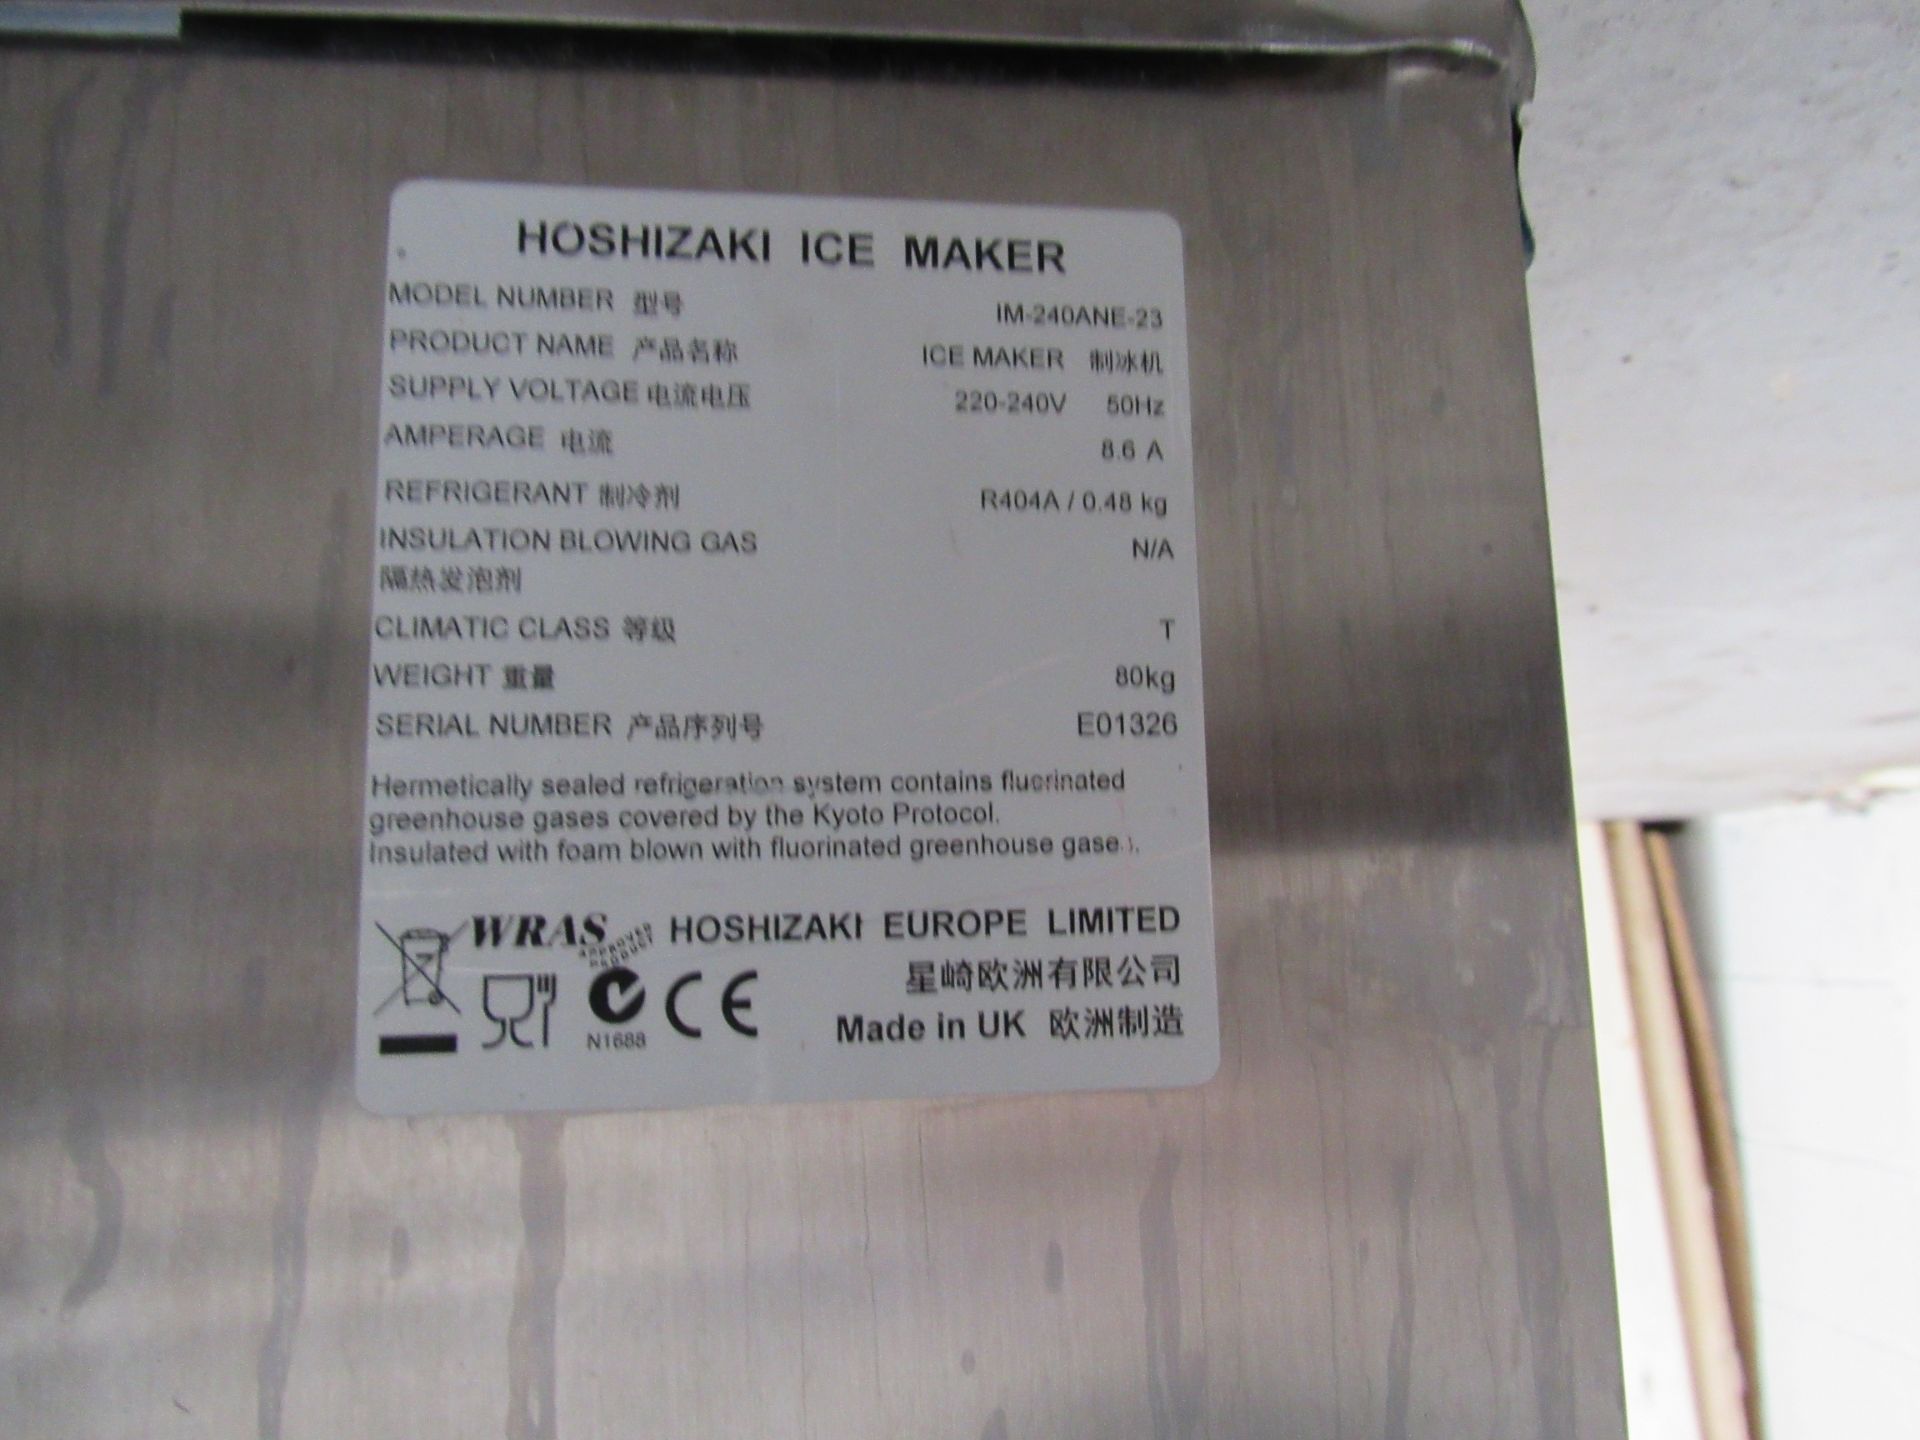 Hoshizaki IM-240ANE-23 Ice Maker - Image 2 of 3